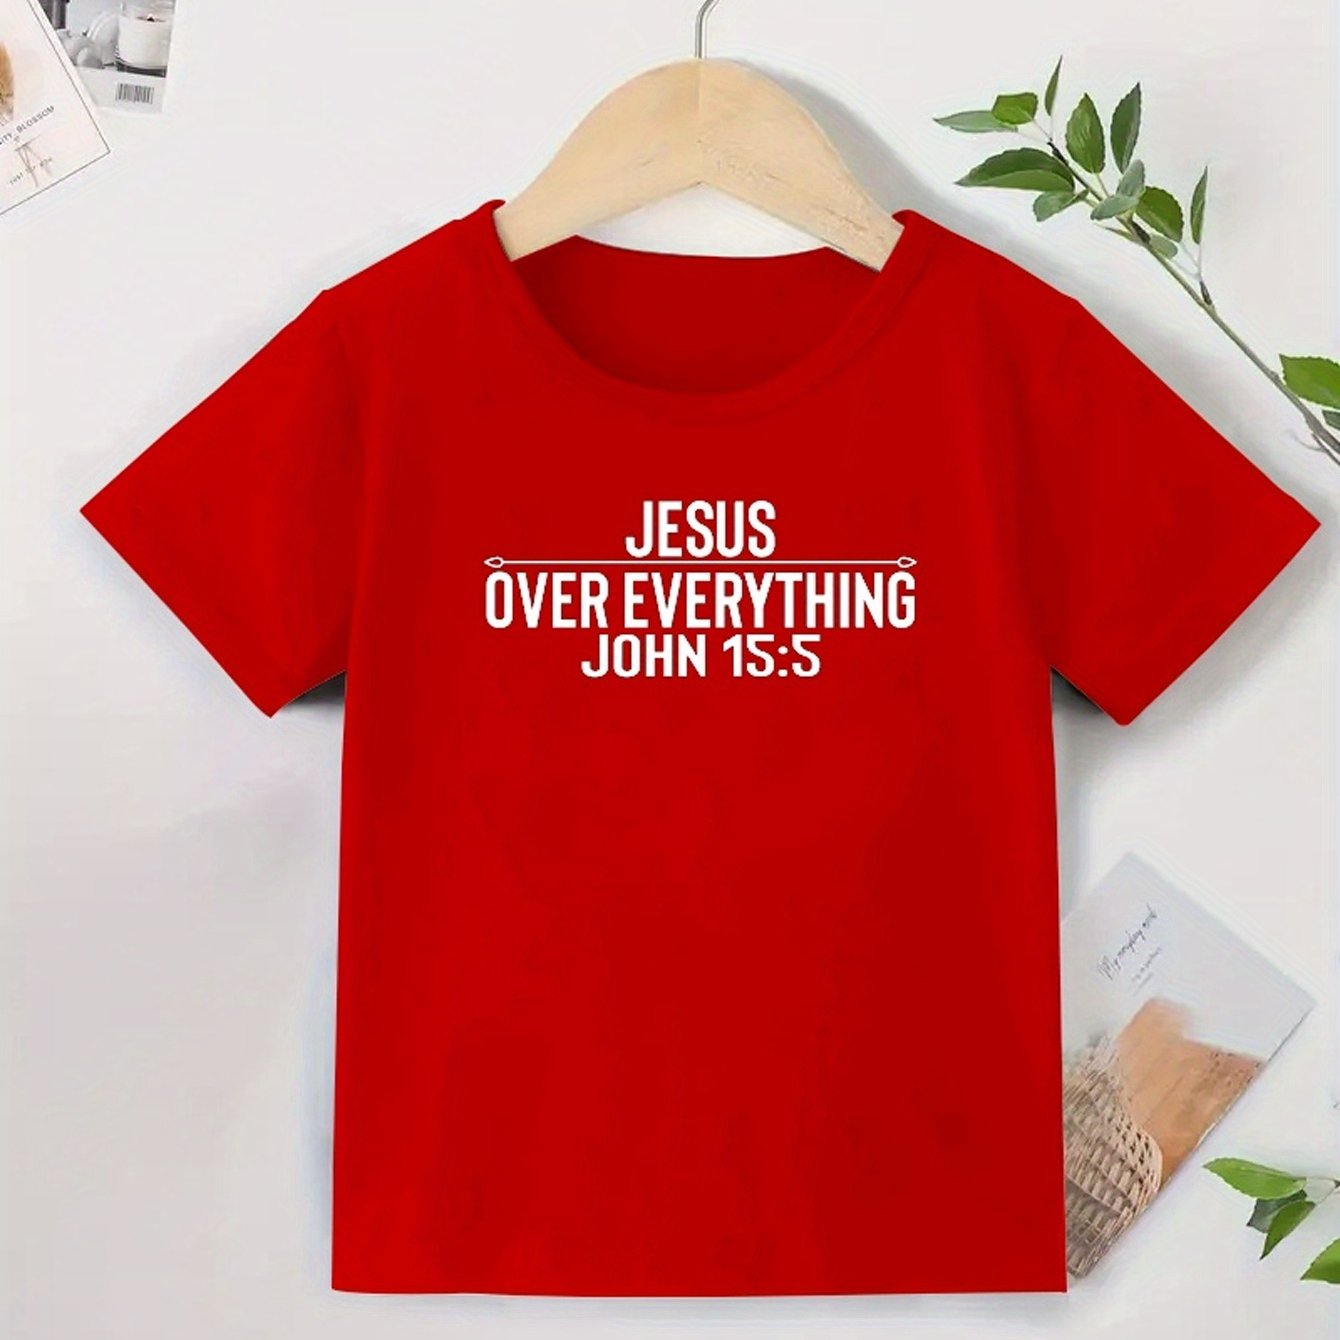 JESUS OVER EVERYTHING Youth Christian T-shirt claimedbygoddesigns